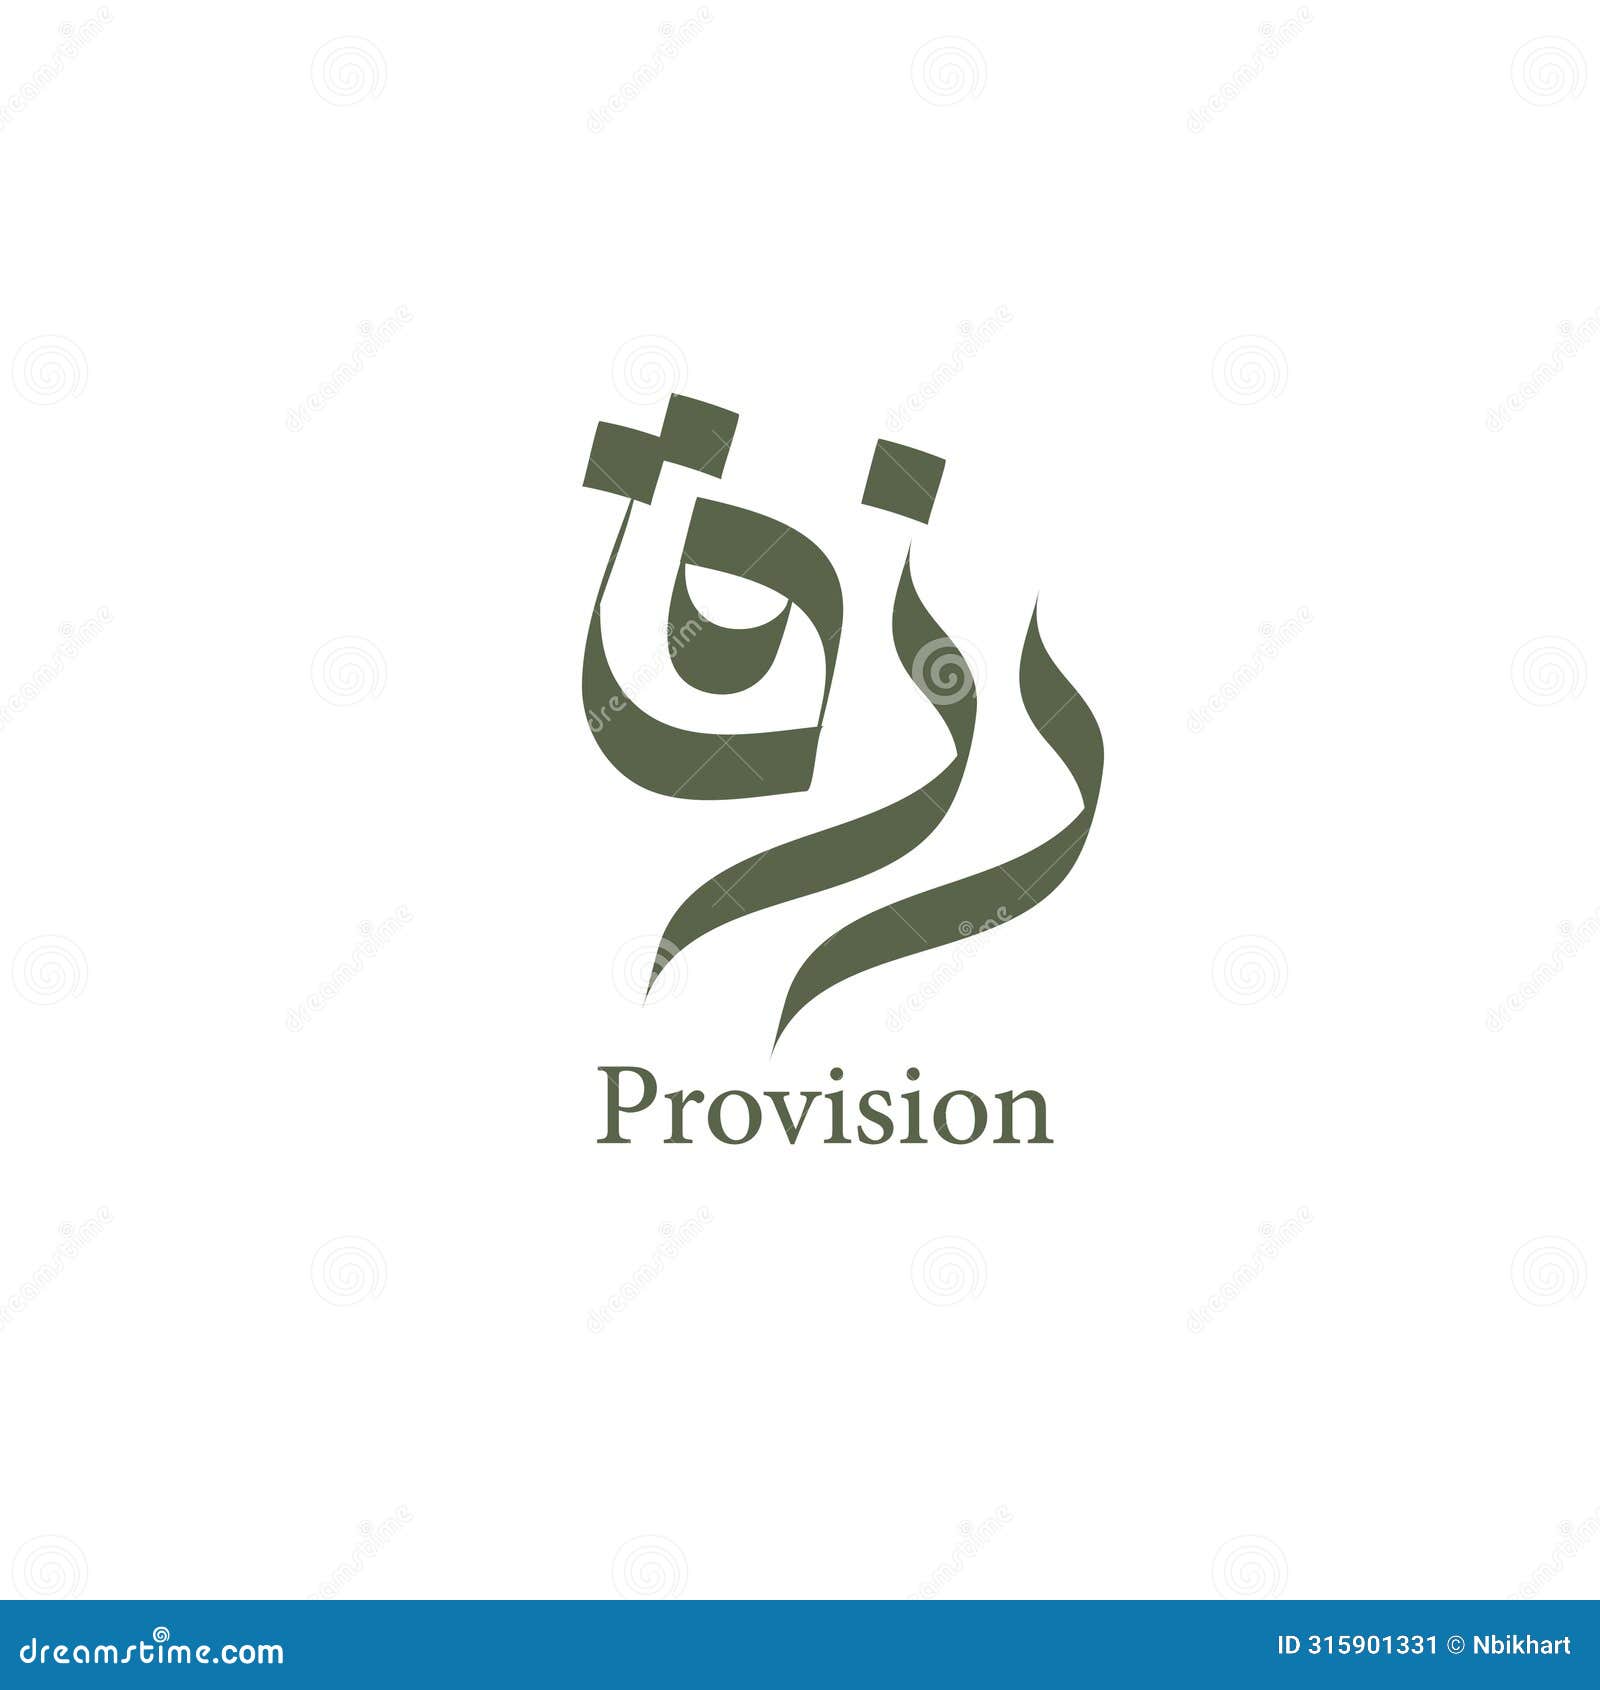 rizq, provision arabic calligraphy logo